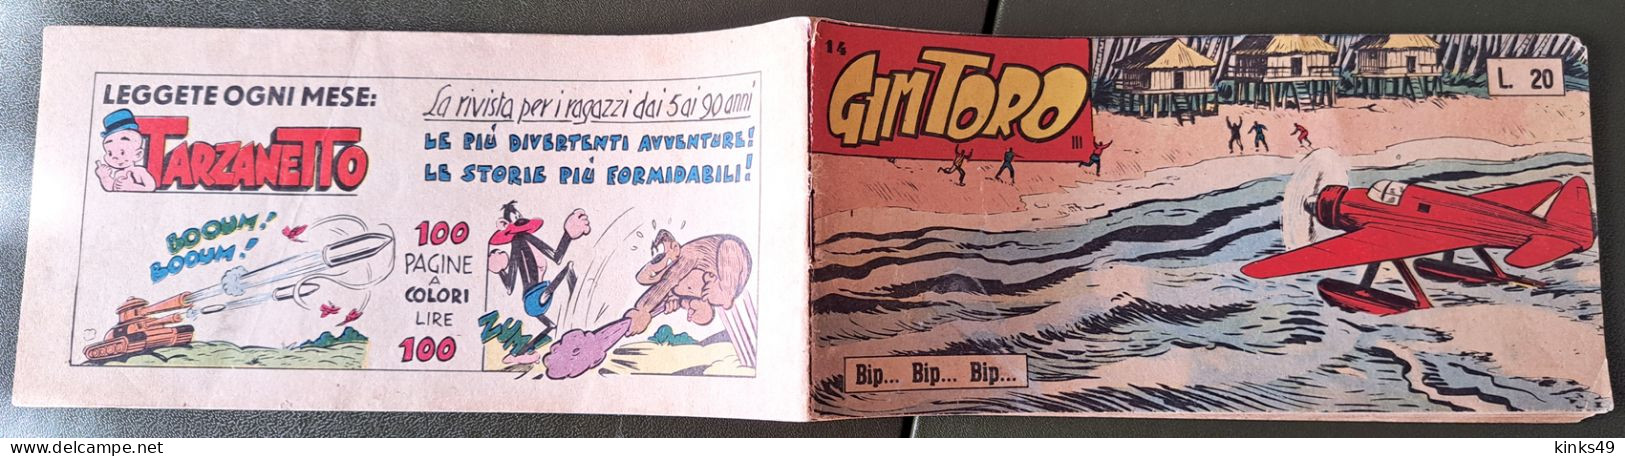 M228> GIM TORO "Bip... Bip... Bip..." Striscia DARDO N° 14 Del 4 GENNAIO 1959 - Premières éditions